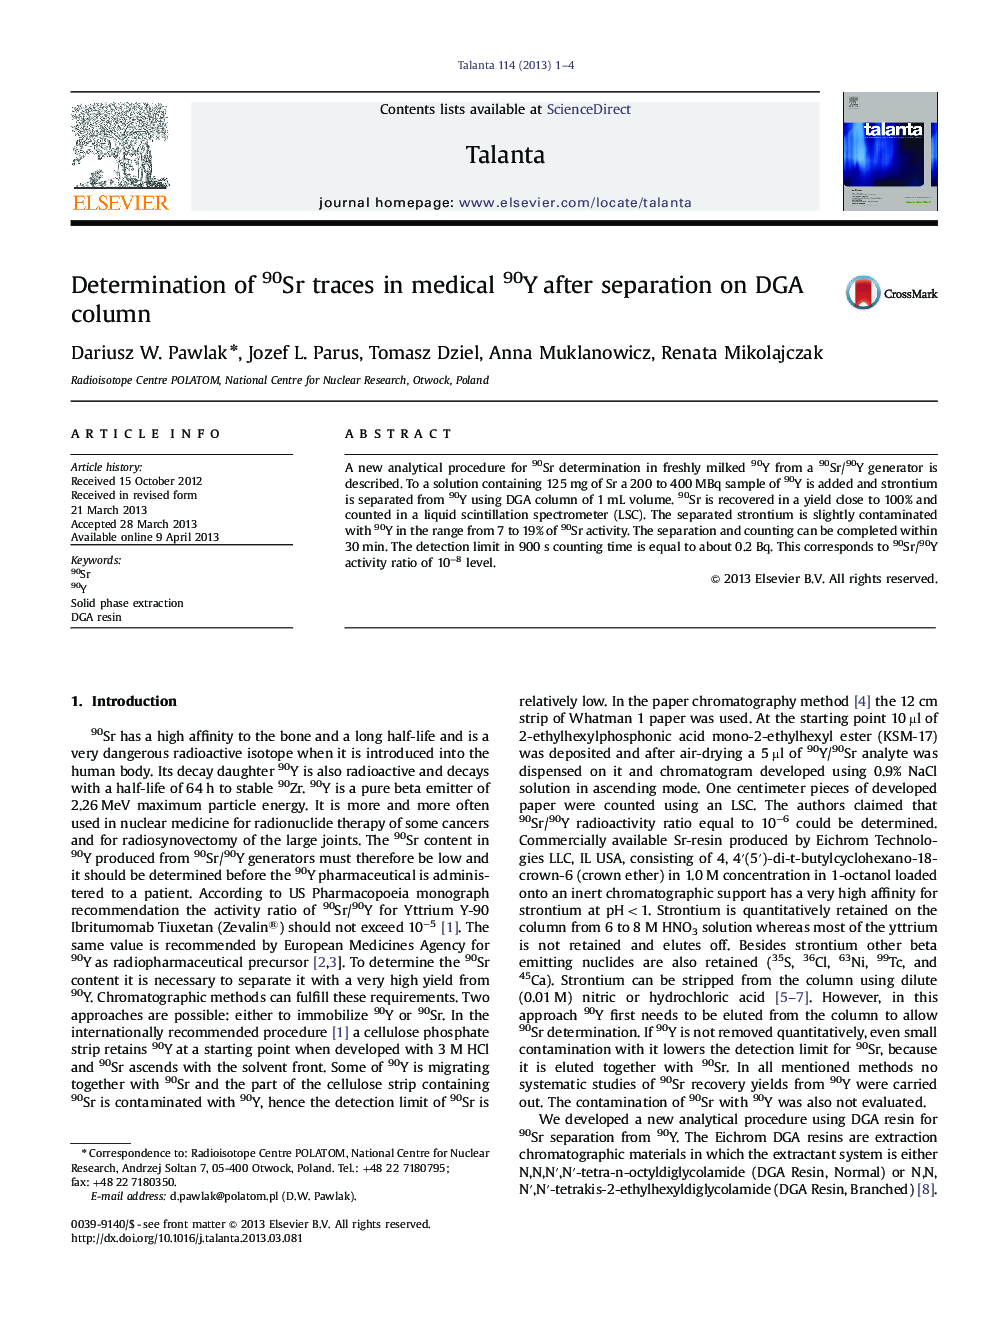 Determination of 90Sr traces in medical 90Y after separation on DGA column